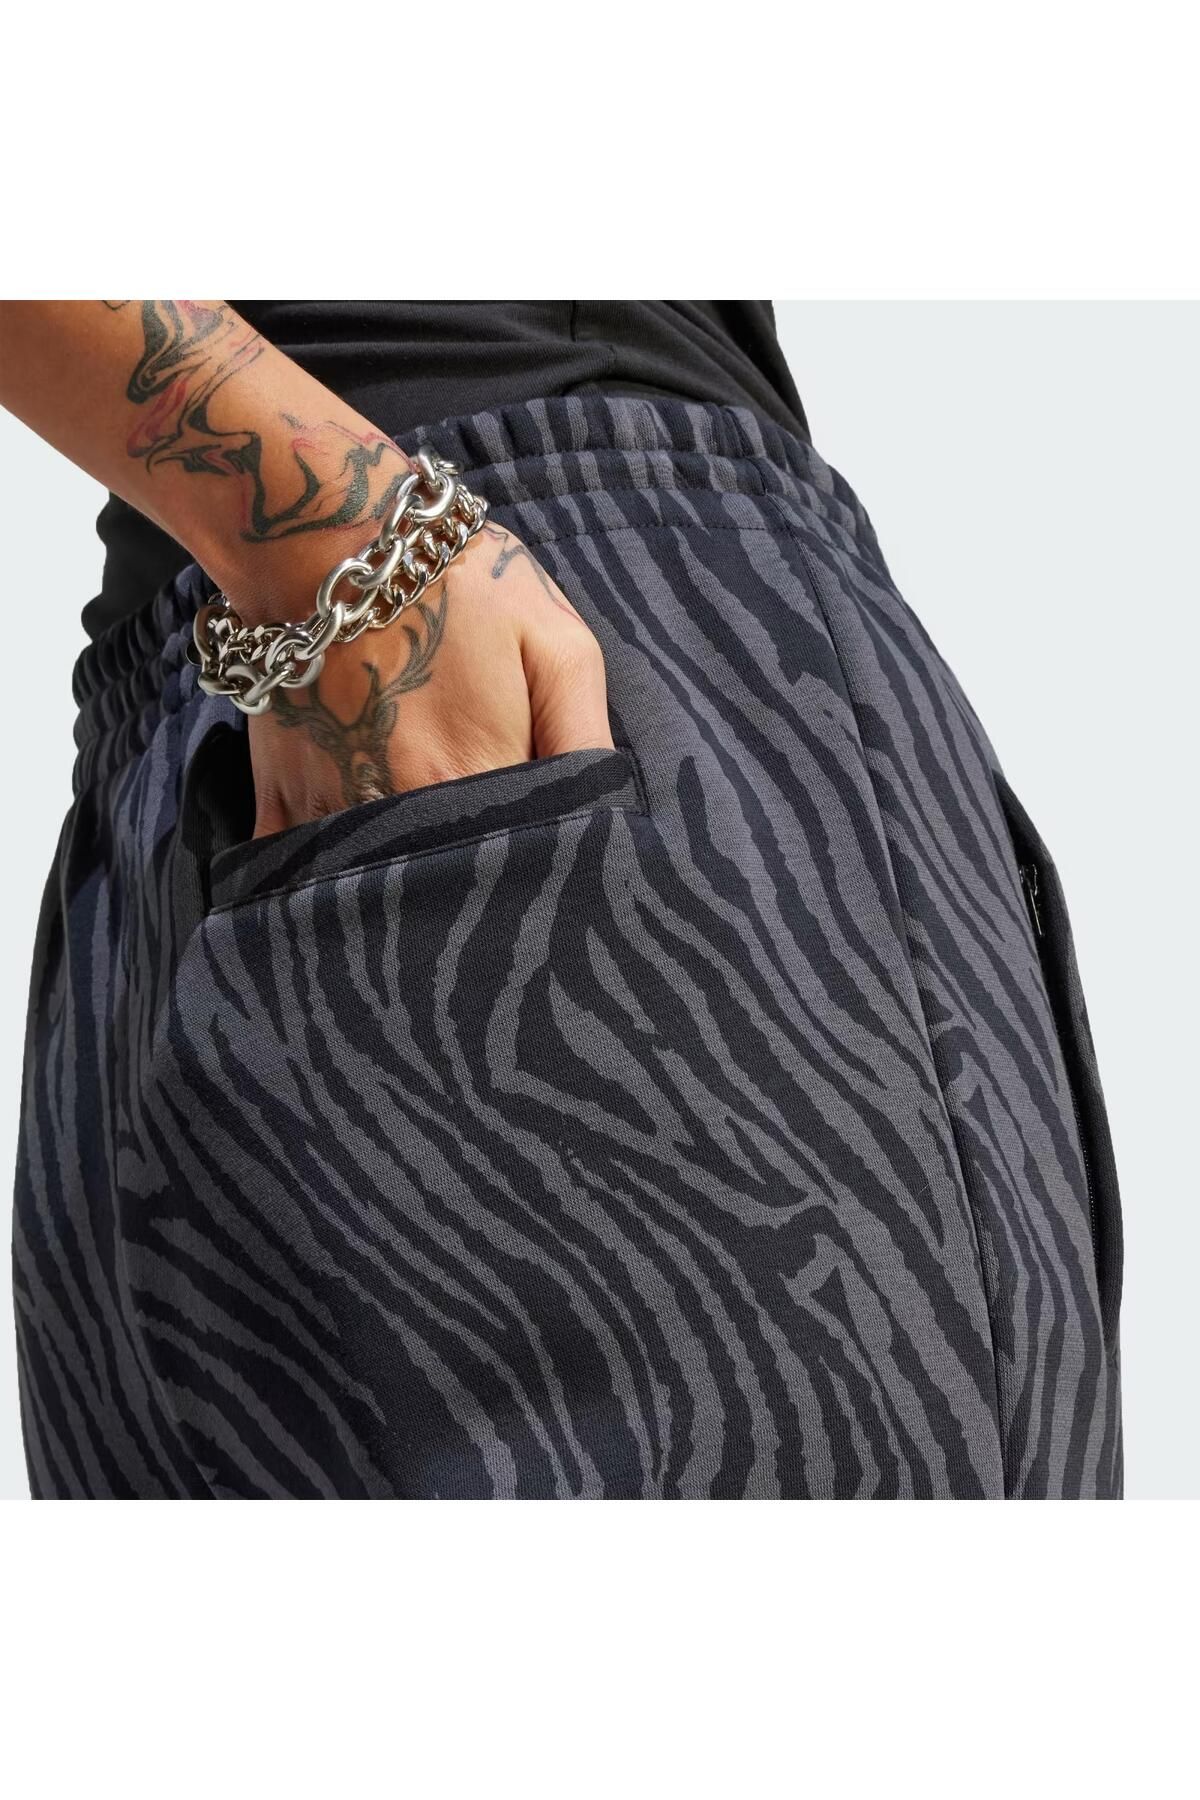 adidas Allover Zebra Animal Print Trendyol Sweatpants - Essentials Women\'s